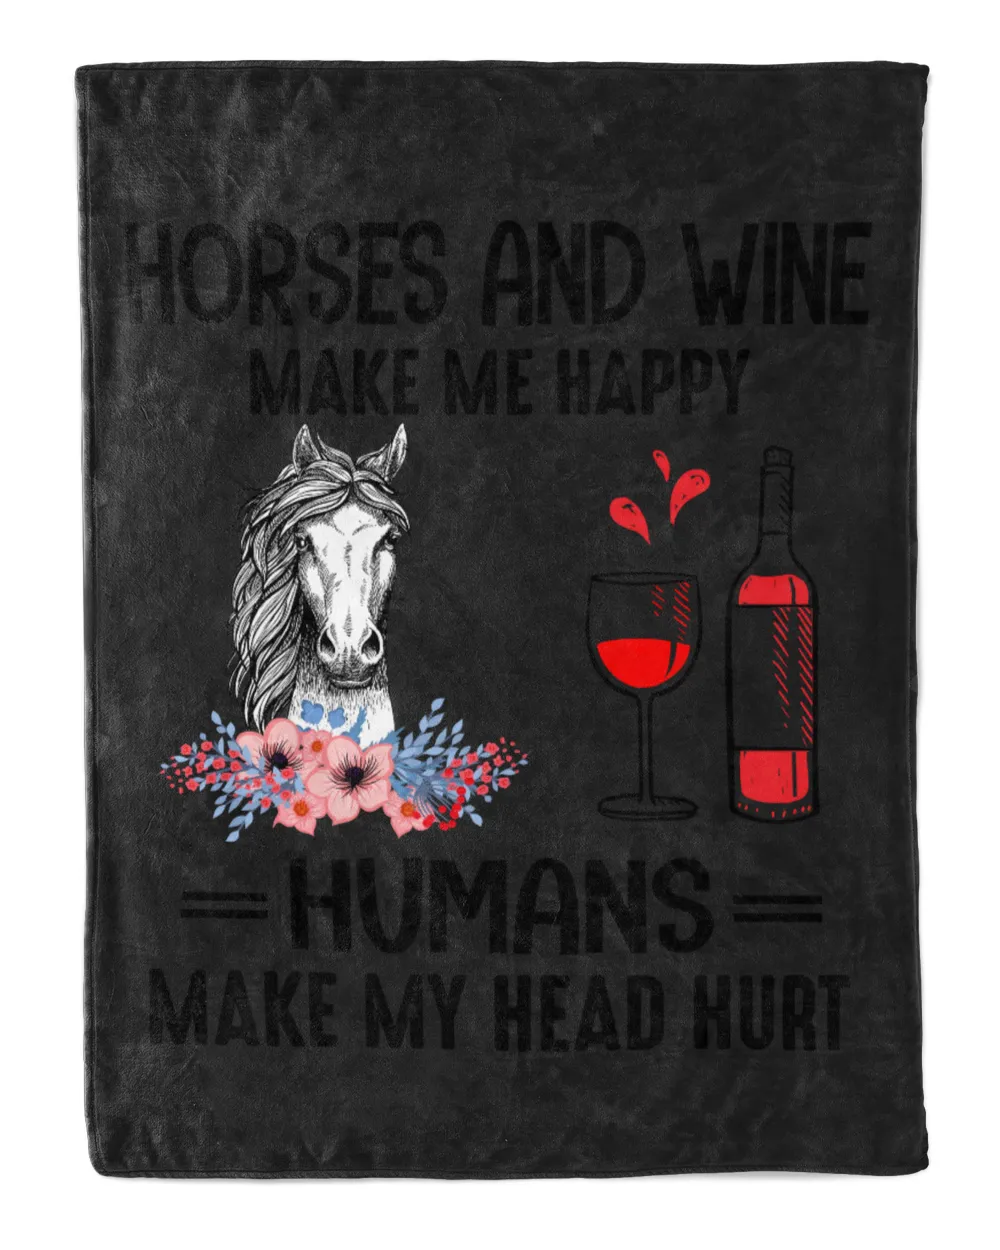 HORSES AND WINE MAKE ME HAPPY